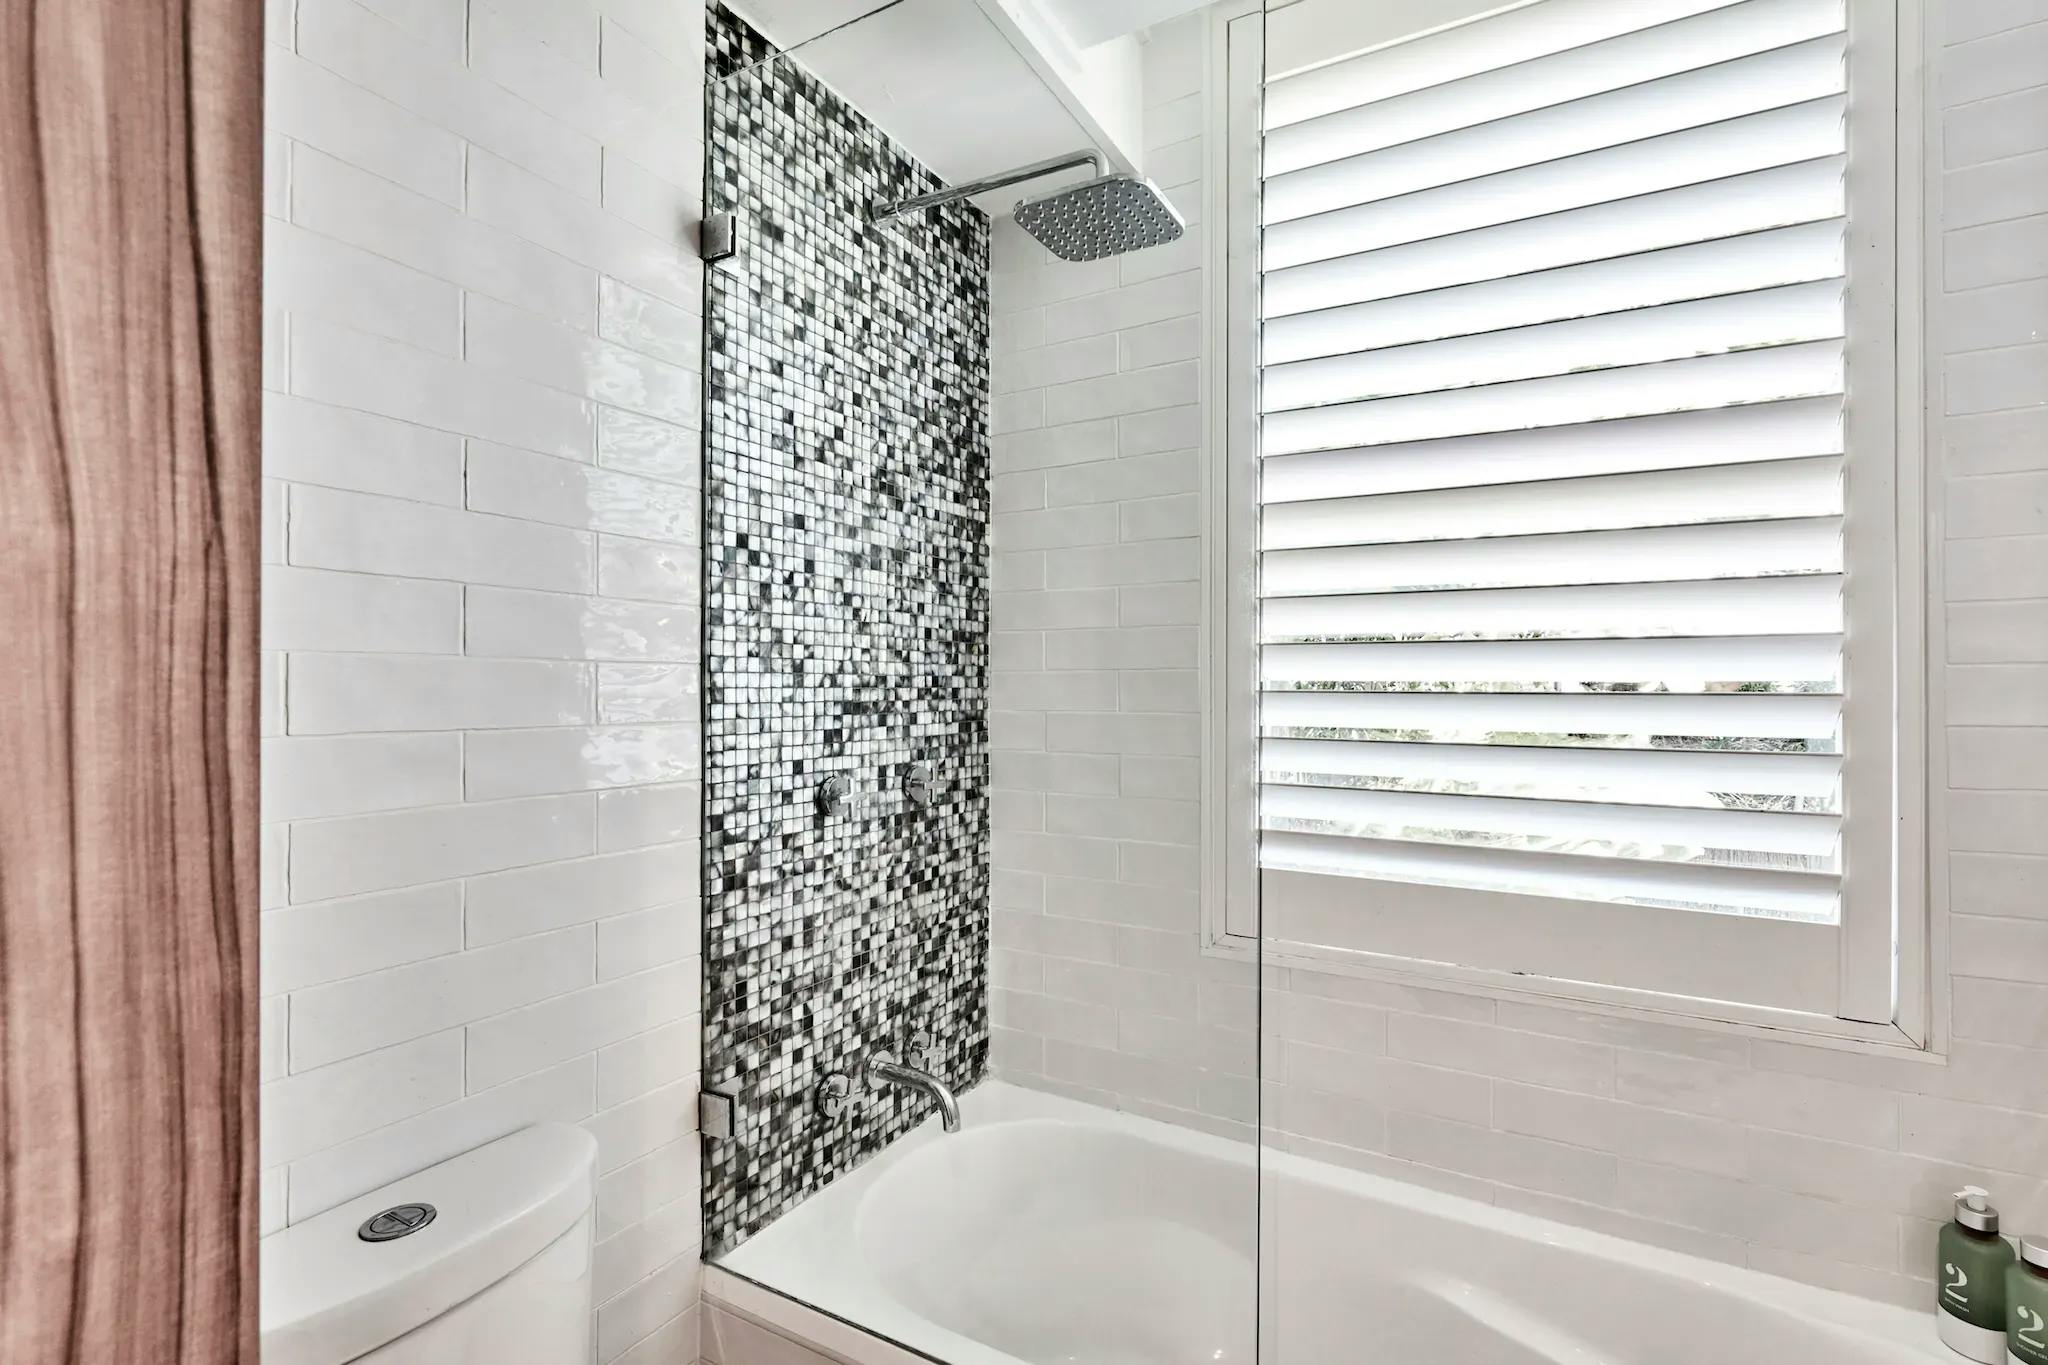 White bathroom, granite wall, bathtub with black and white speckle, window in enclosure, soap in corner.